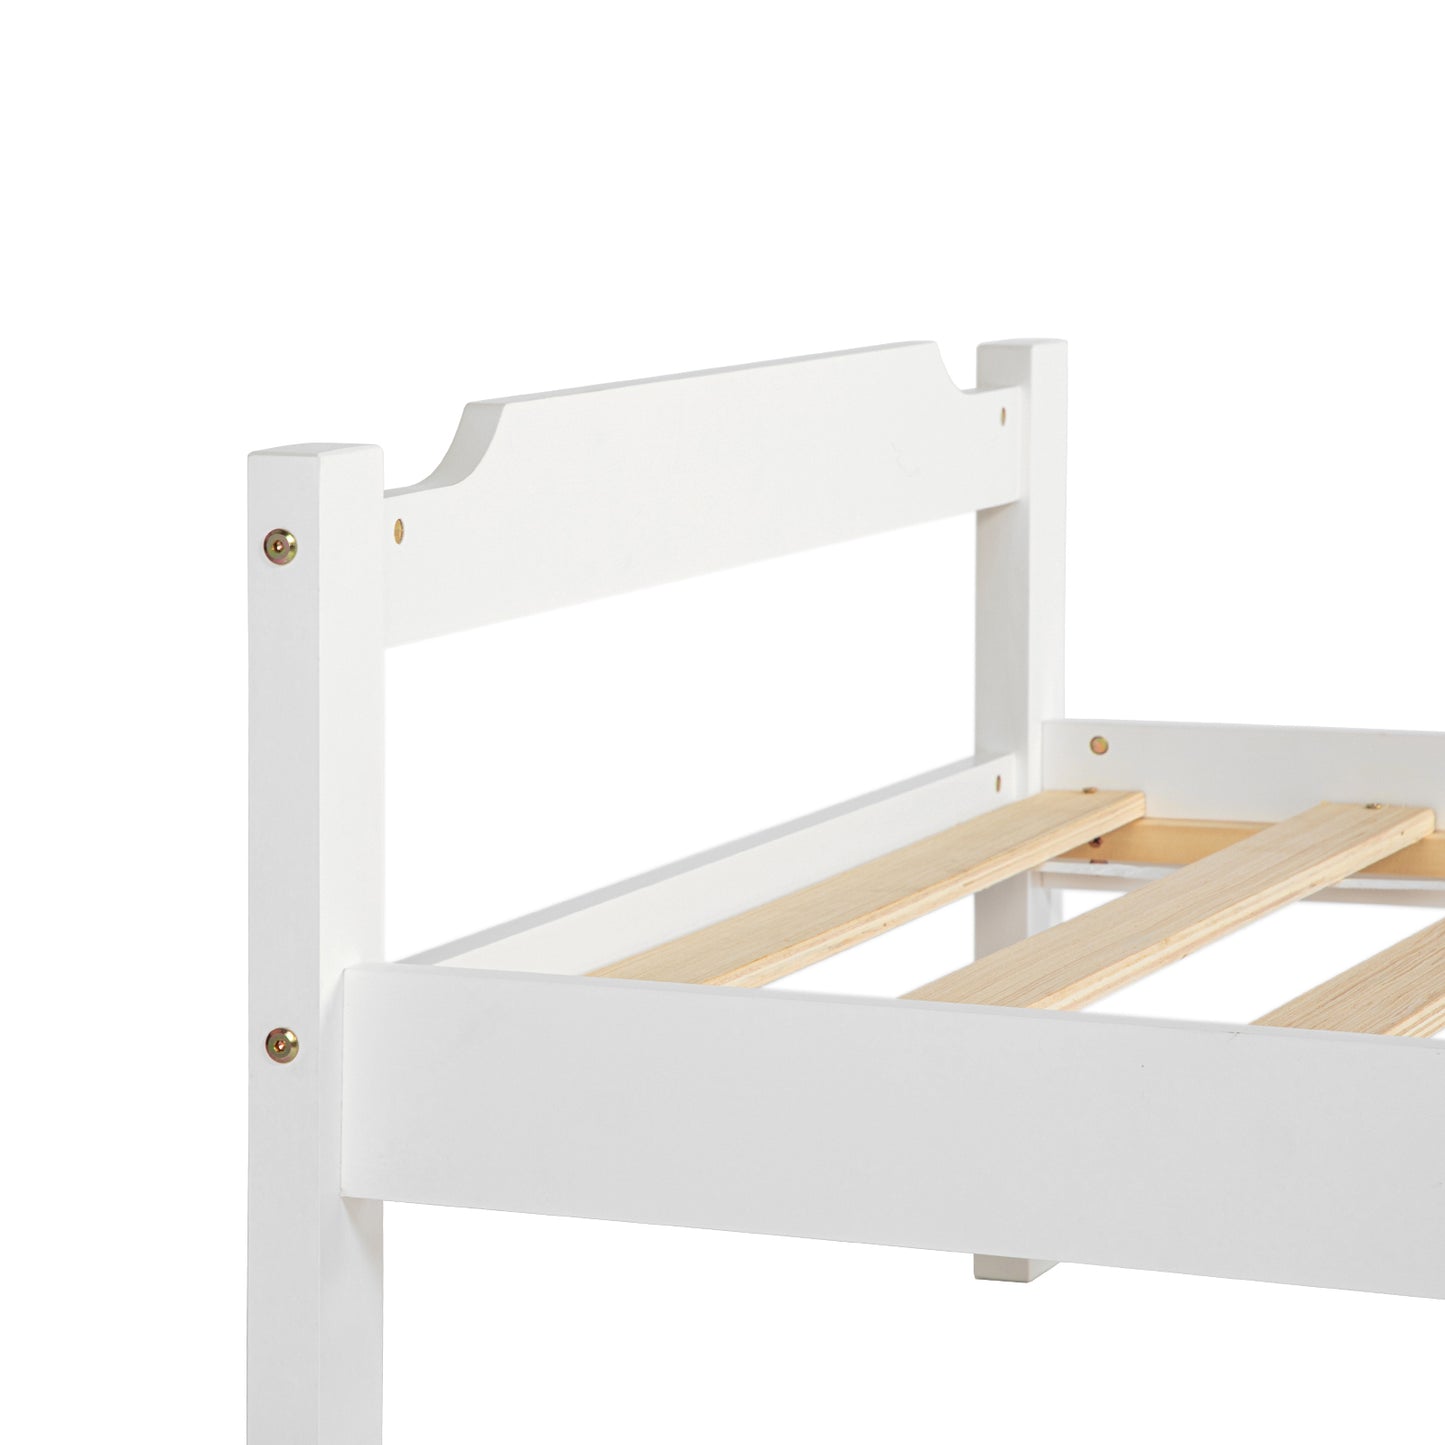 PONT Single Pine Wooden Bed 98*196cm - White